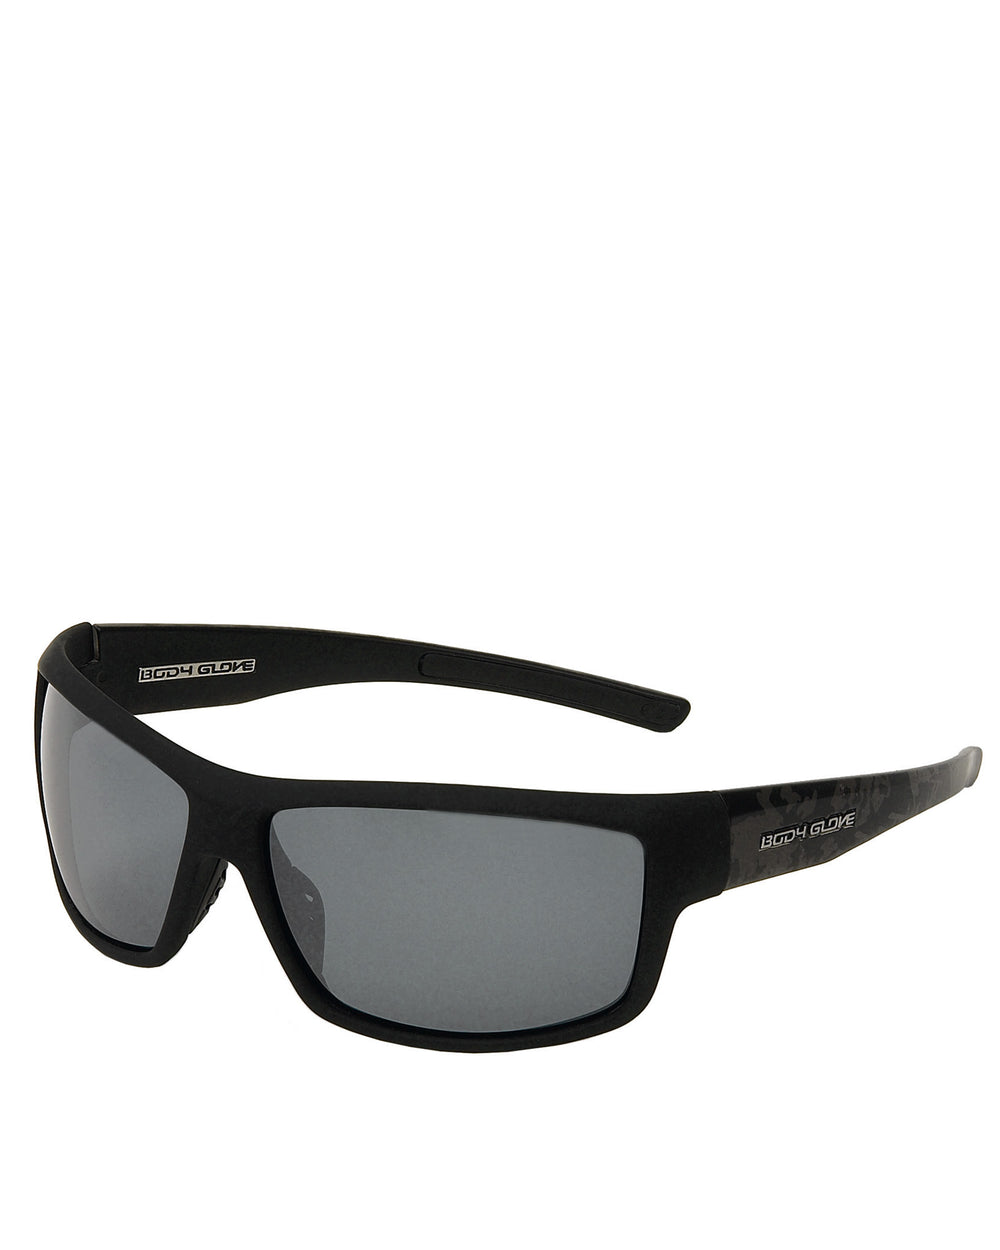 Men's Huntington Beach Polarized Sunglasses - Black